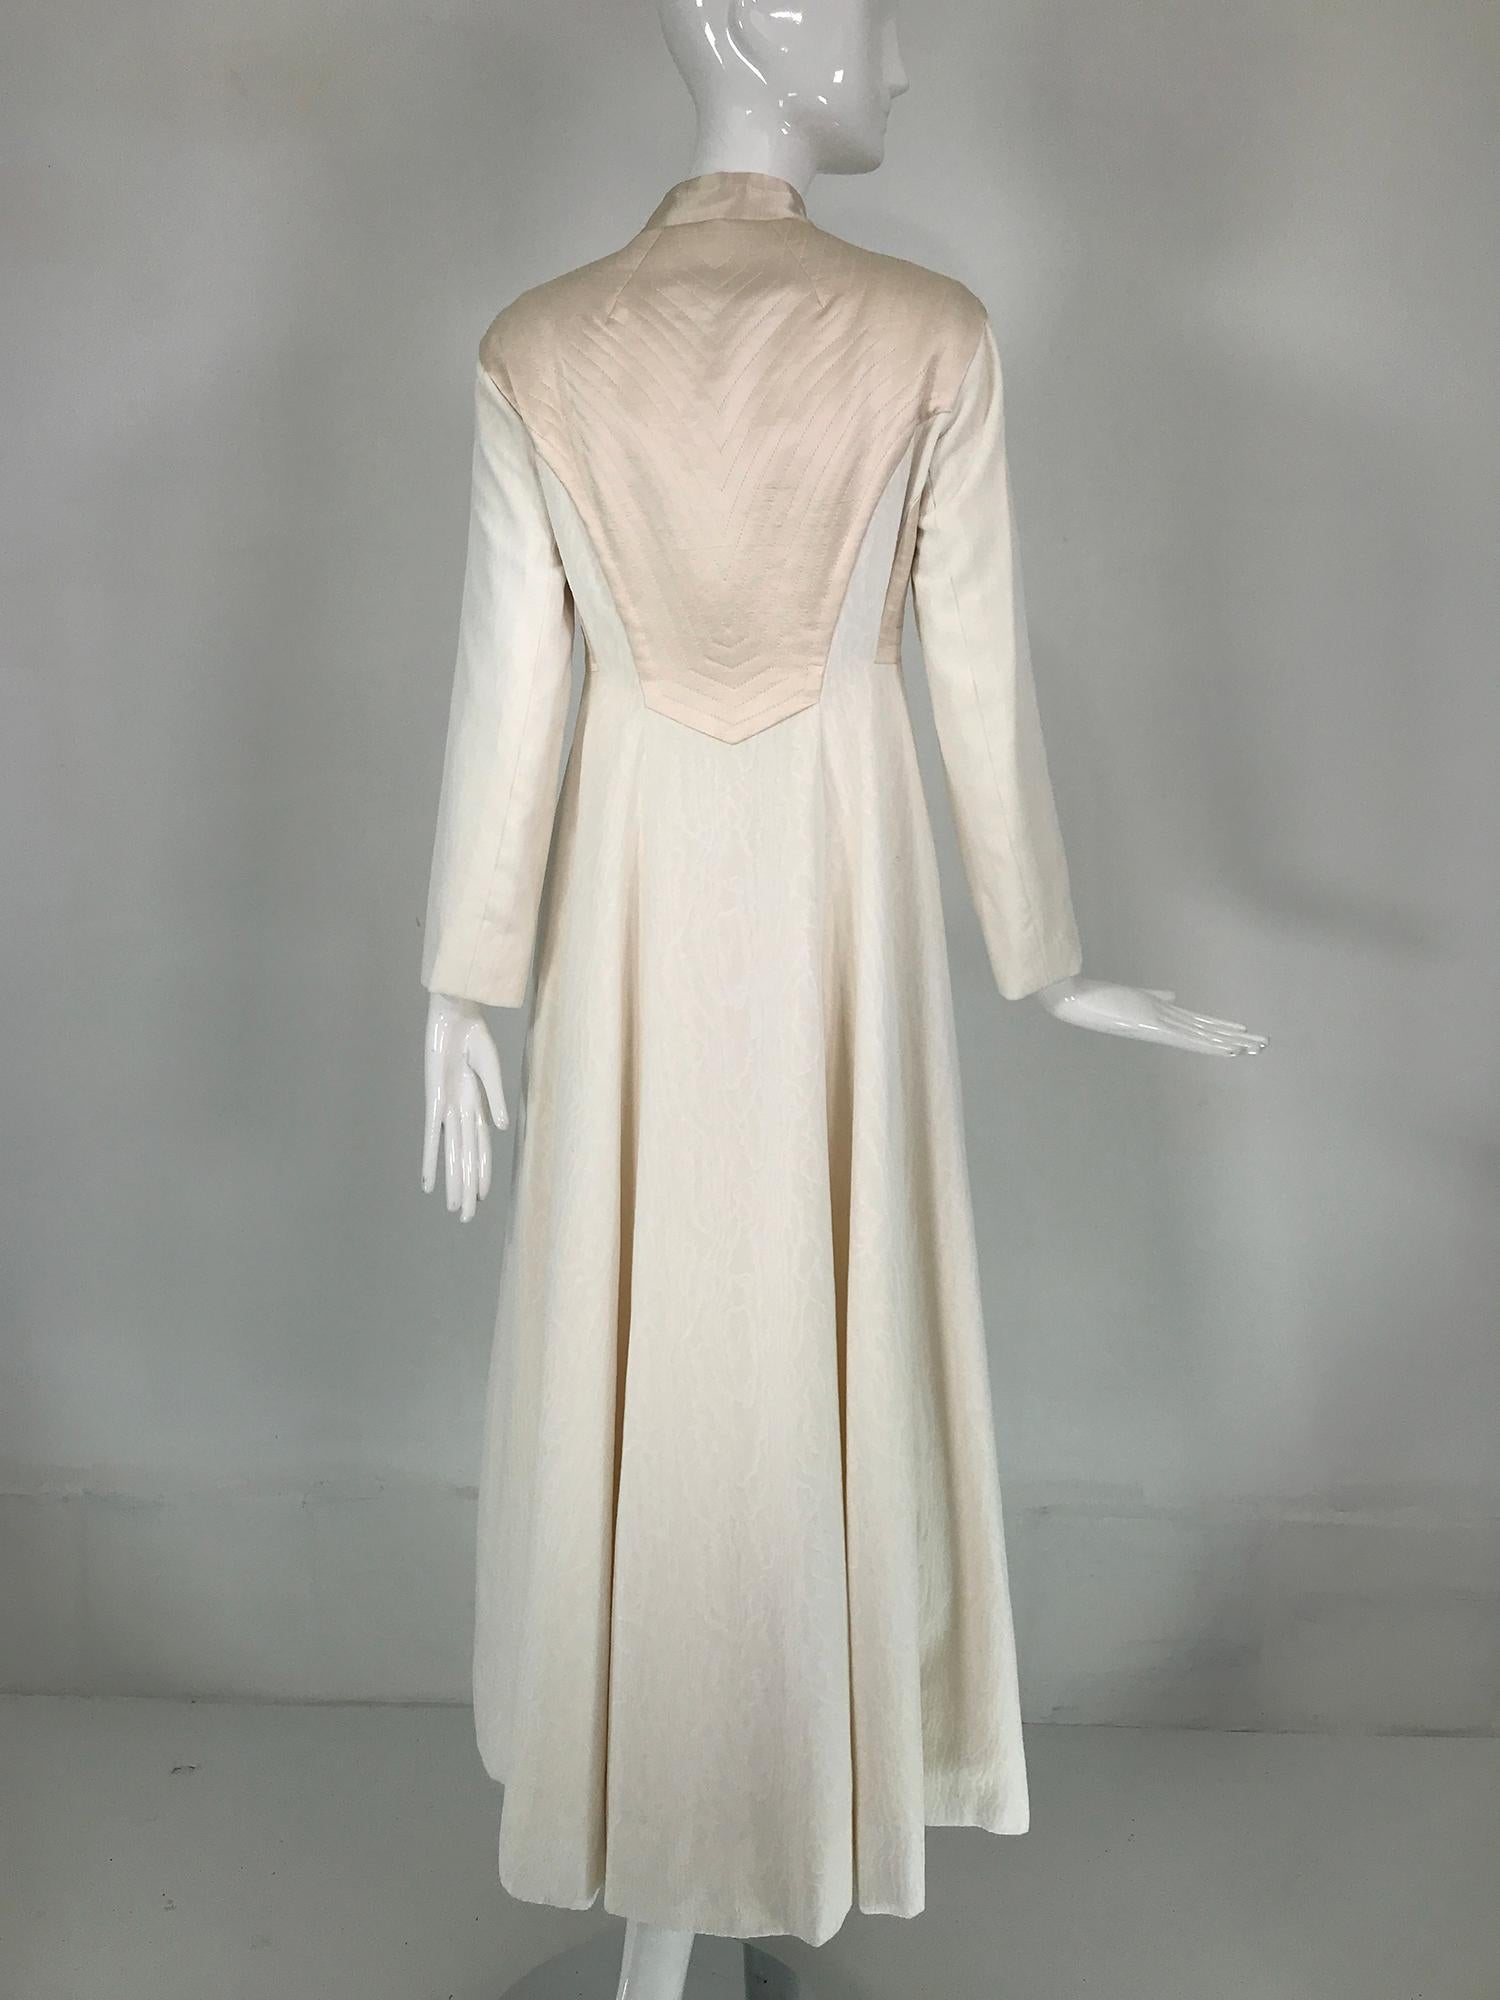 Women's Ronald Amey Rare Evening Coat & Evening Dress in Devore Velvet & Satin 1970s For Sale